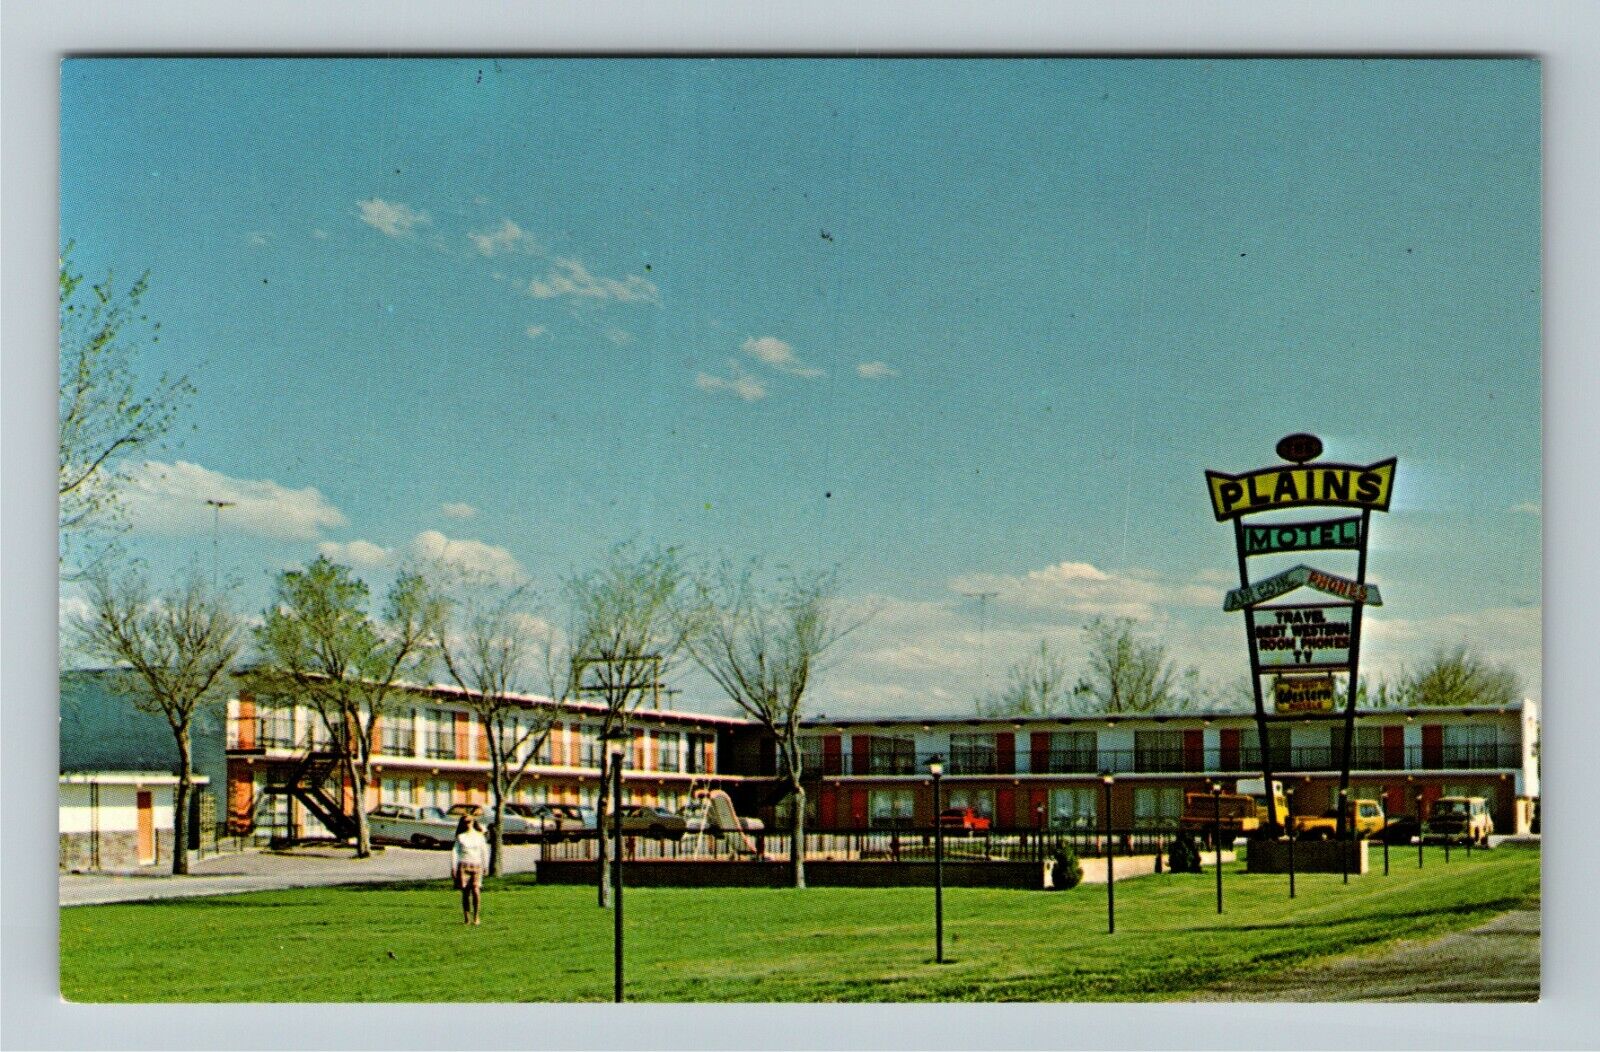 Wall SD-South Dakota The Plains Motel Panoramic Advertising Vintage Postcard